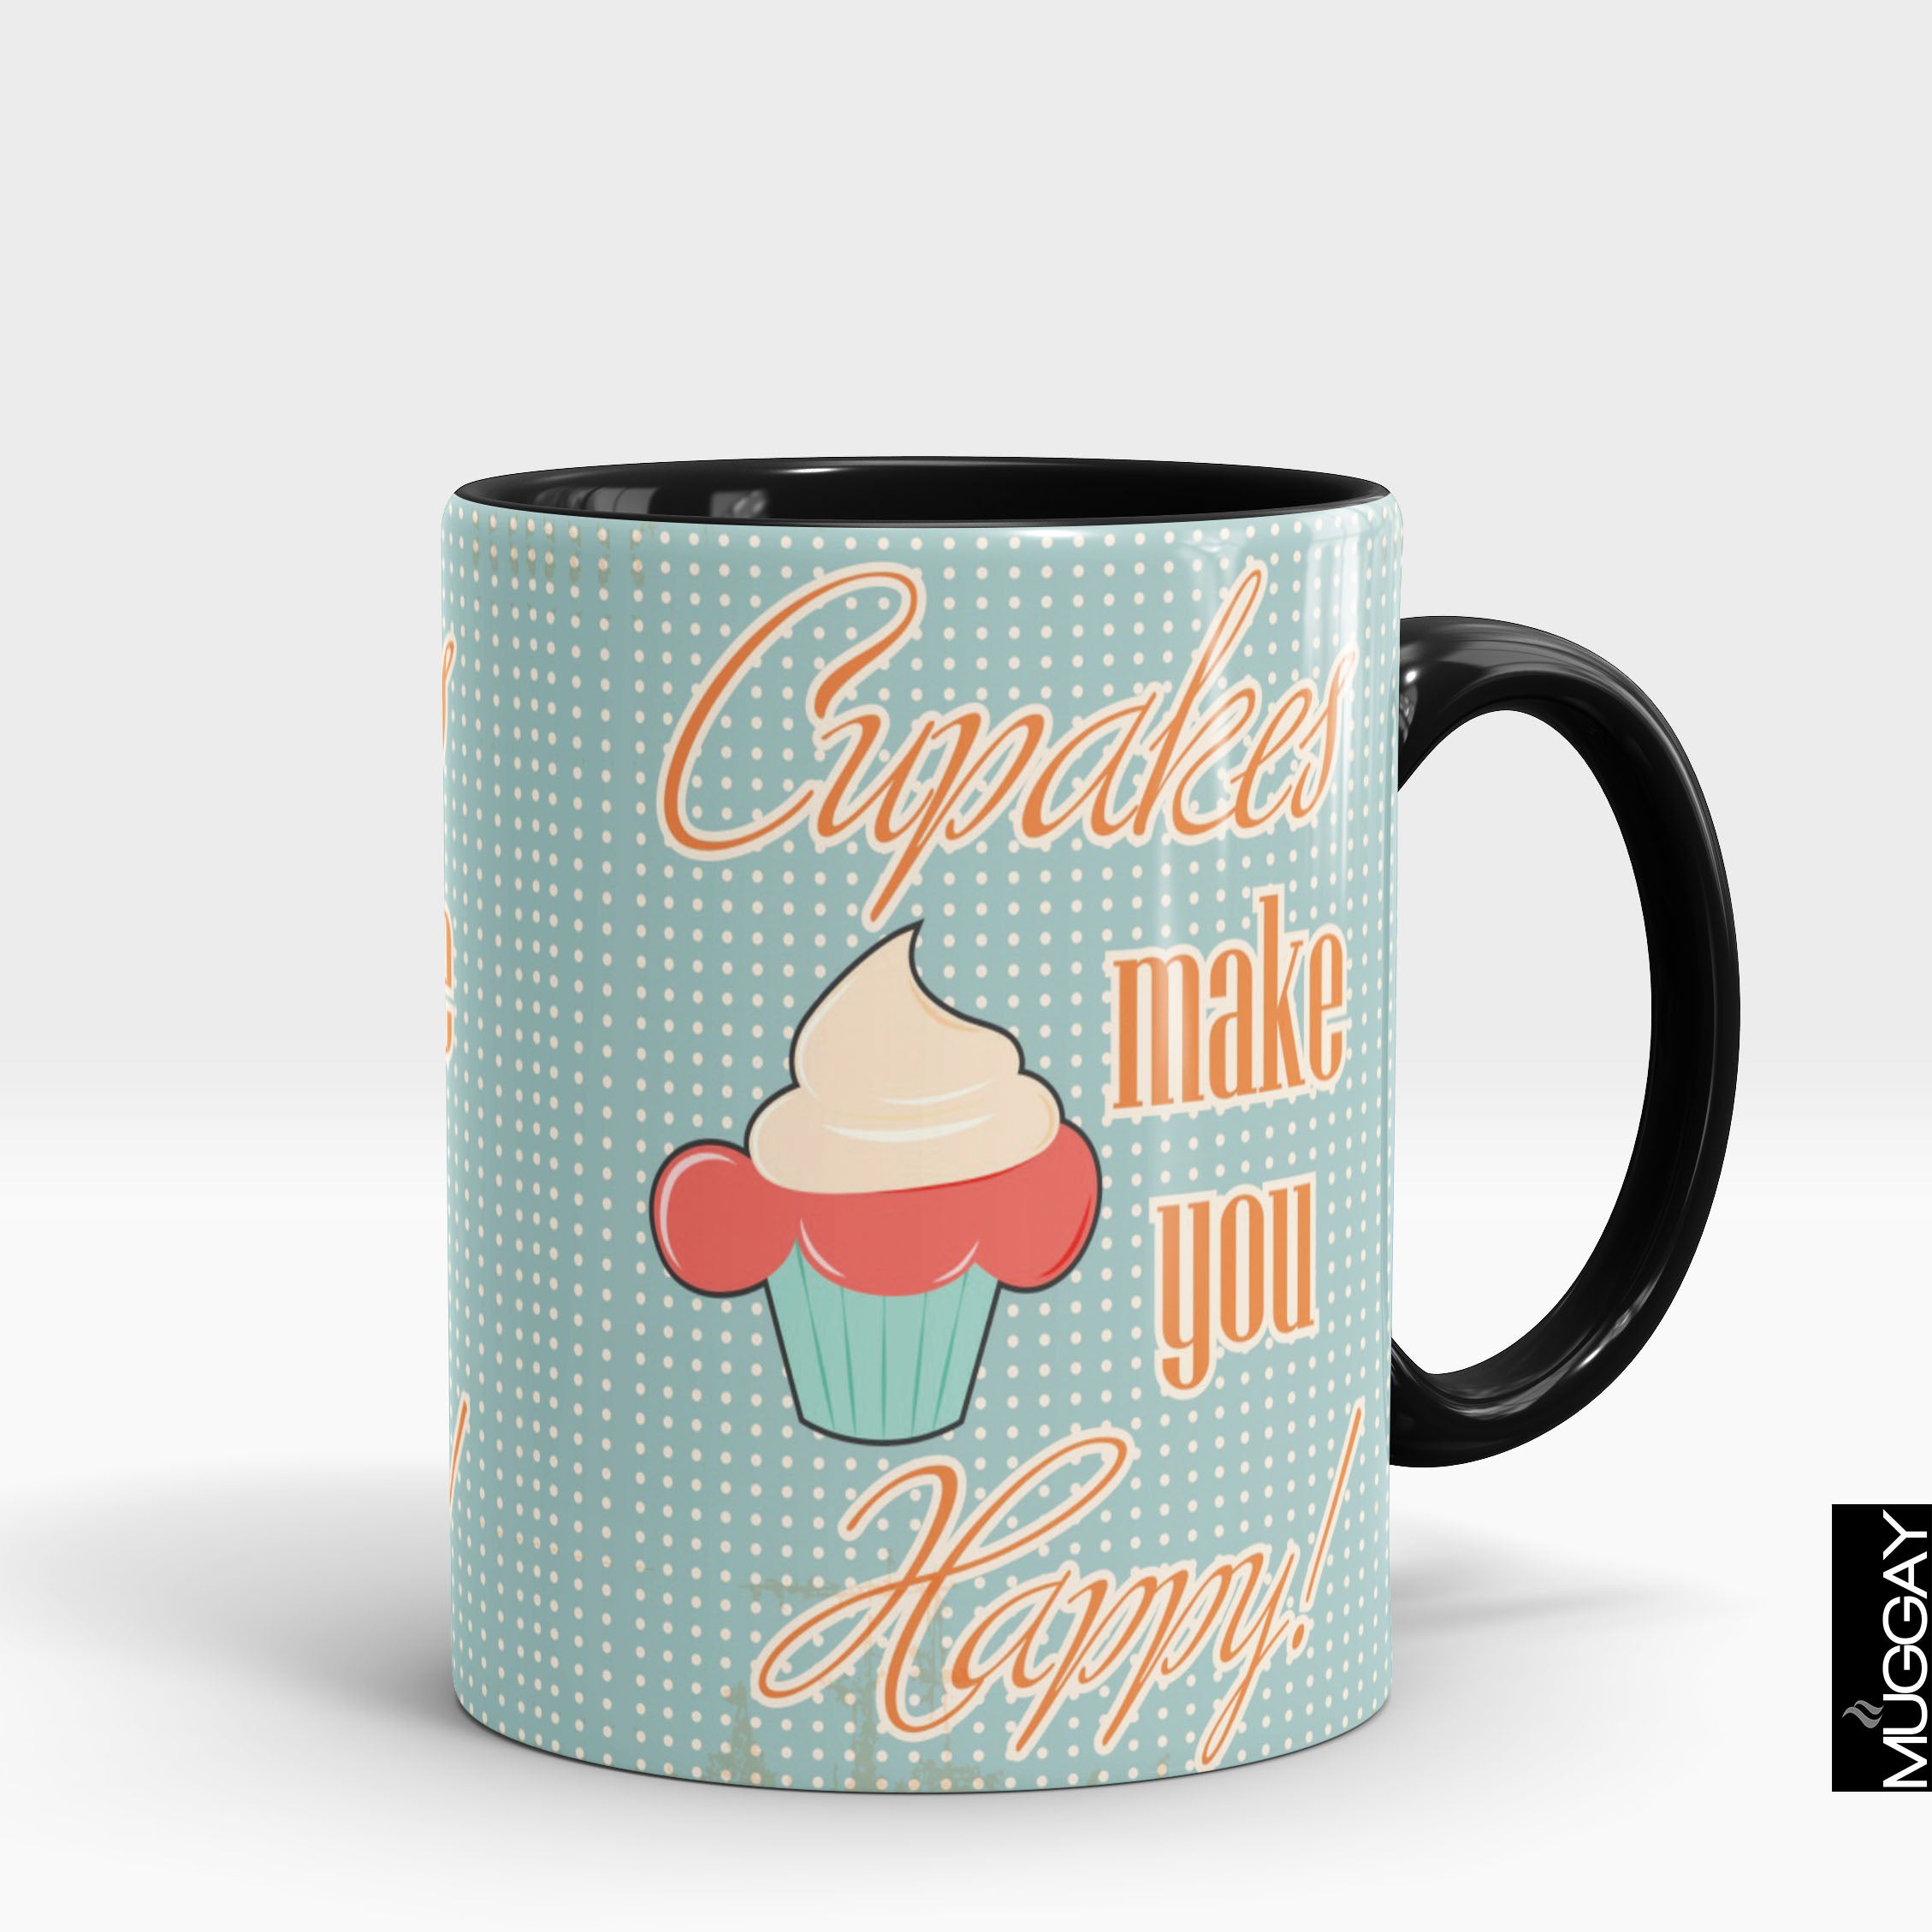 Baking Mug - bkr1 - Muggay.com - Mugs - Printing shop - truck Art mugs - Mug printing - Customized printing - Digital printing - Muggay 